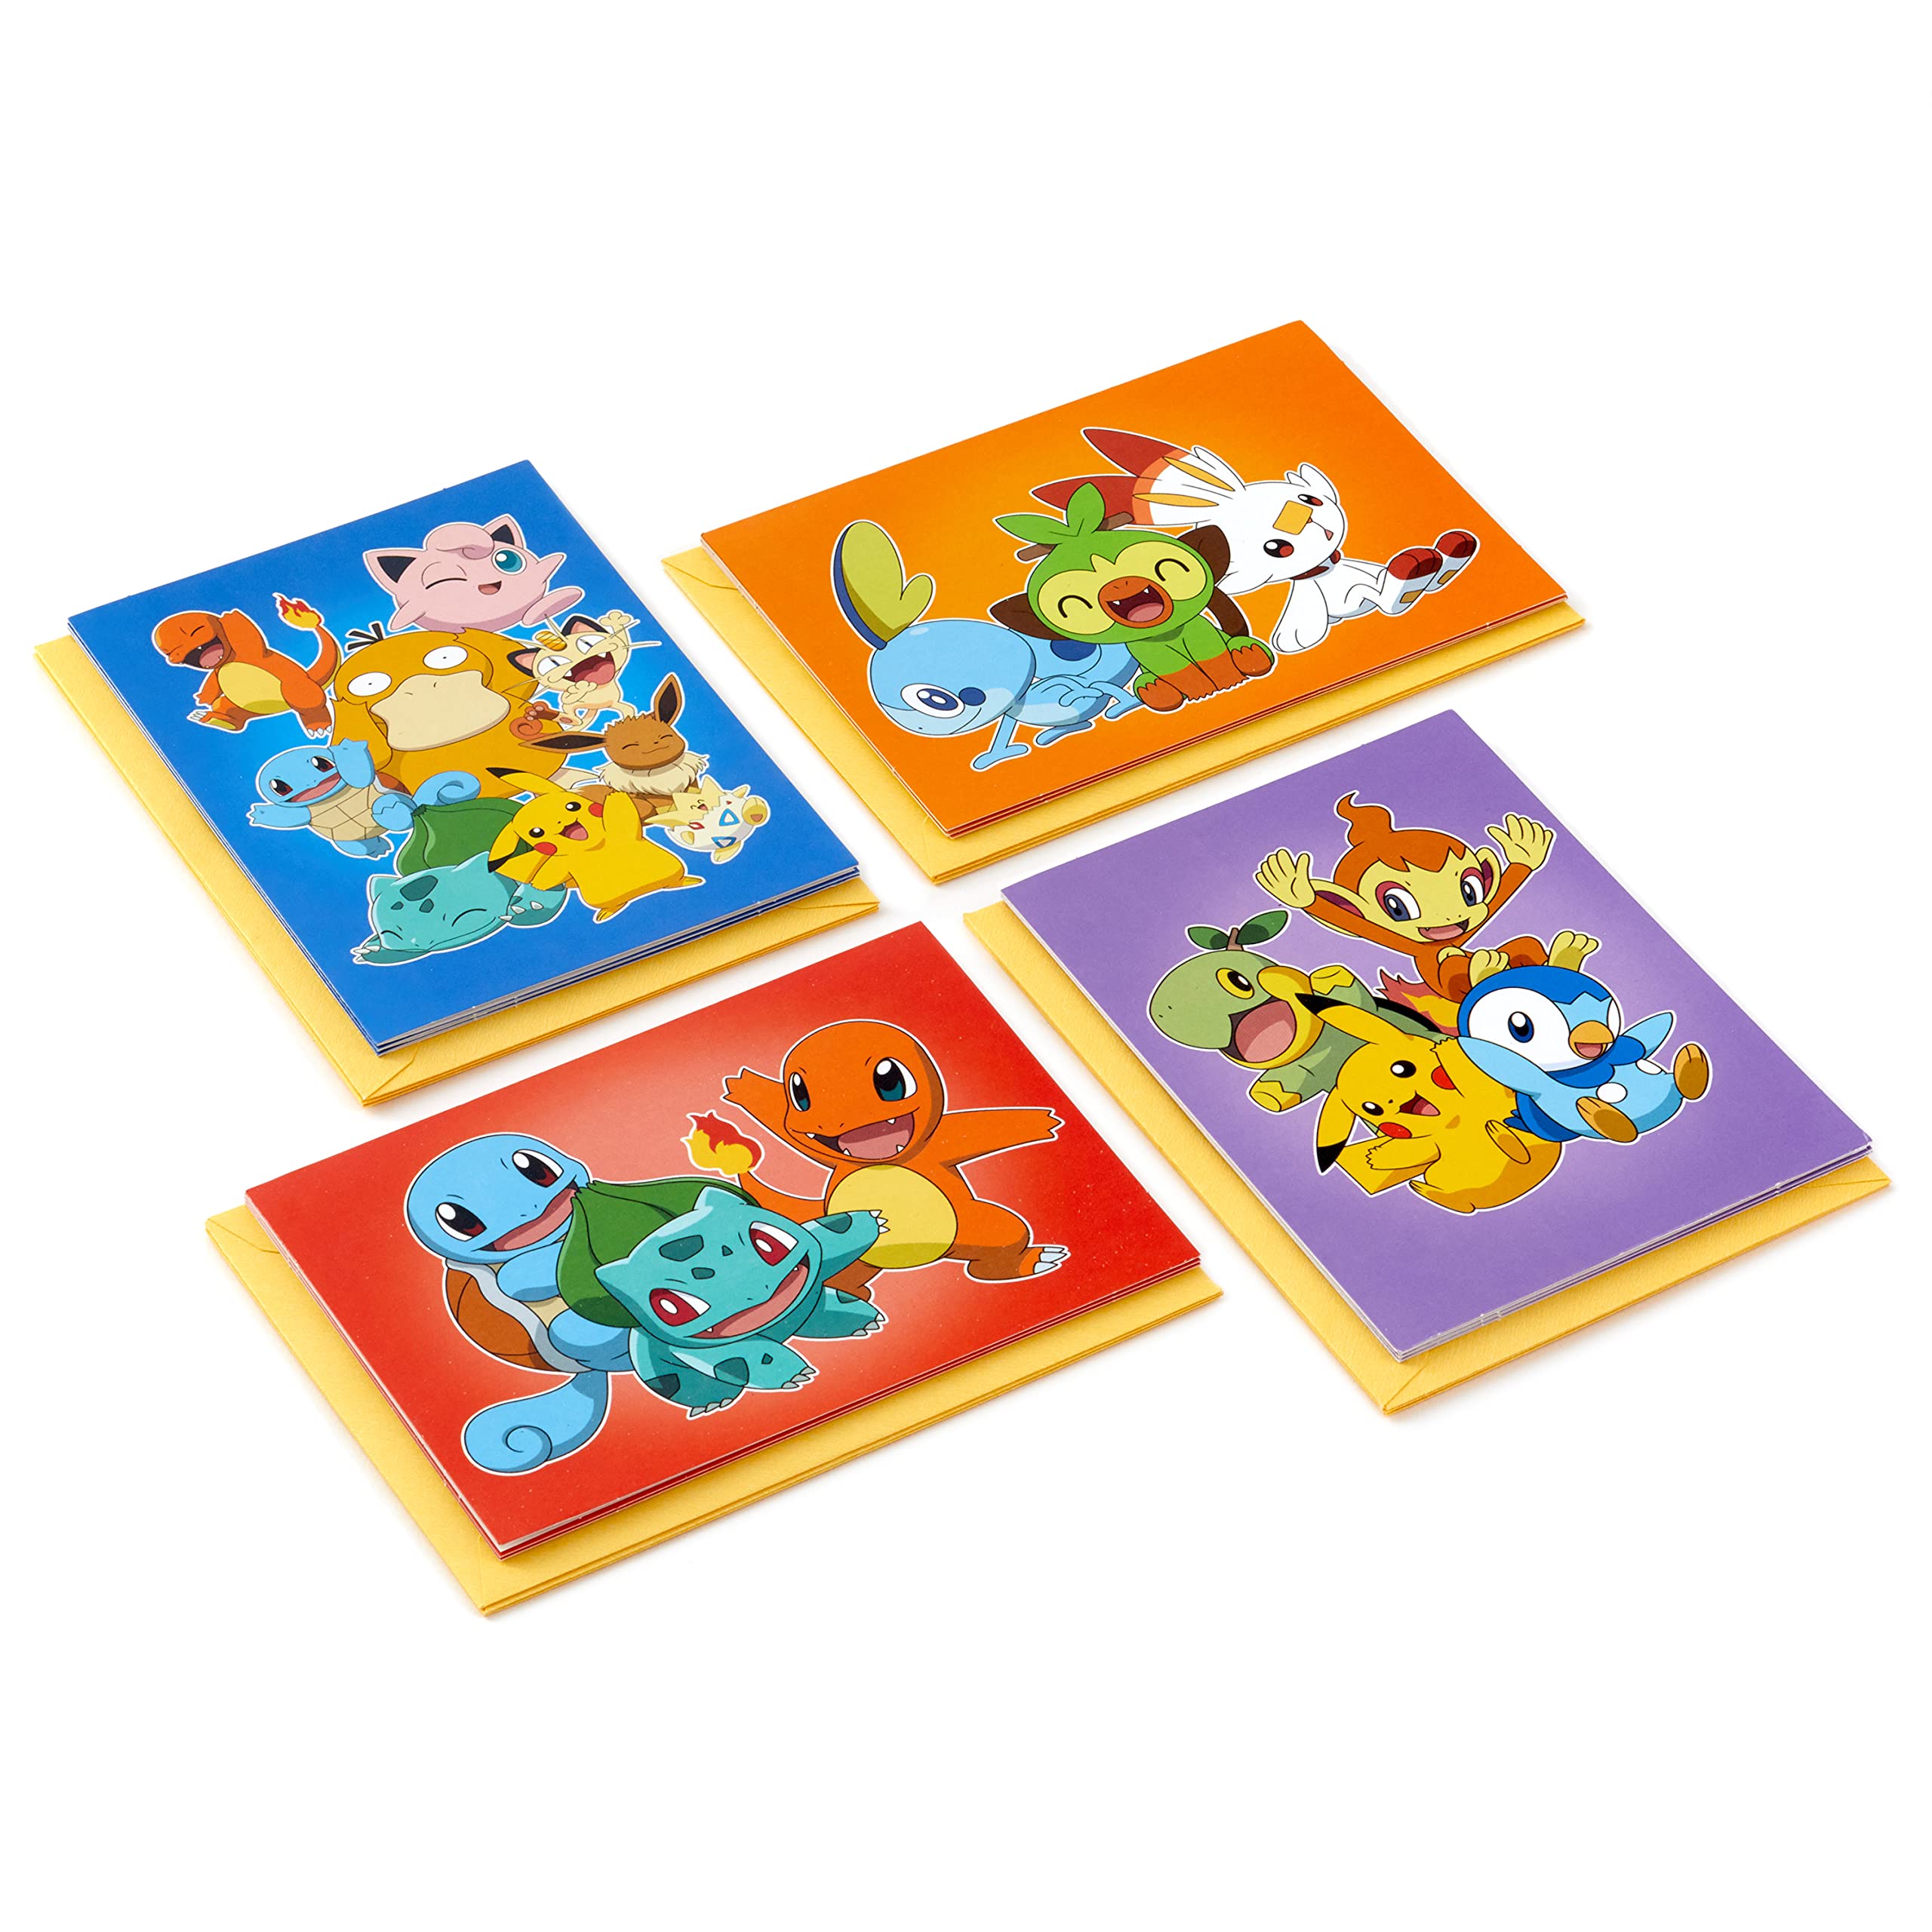 Hallmark Kids Pokémon All Occasion Cards Assortment, 12 Blank Cards with Envelopes (Pikachu, Bulbasaur, Charmander, Squirtle)